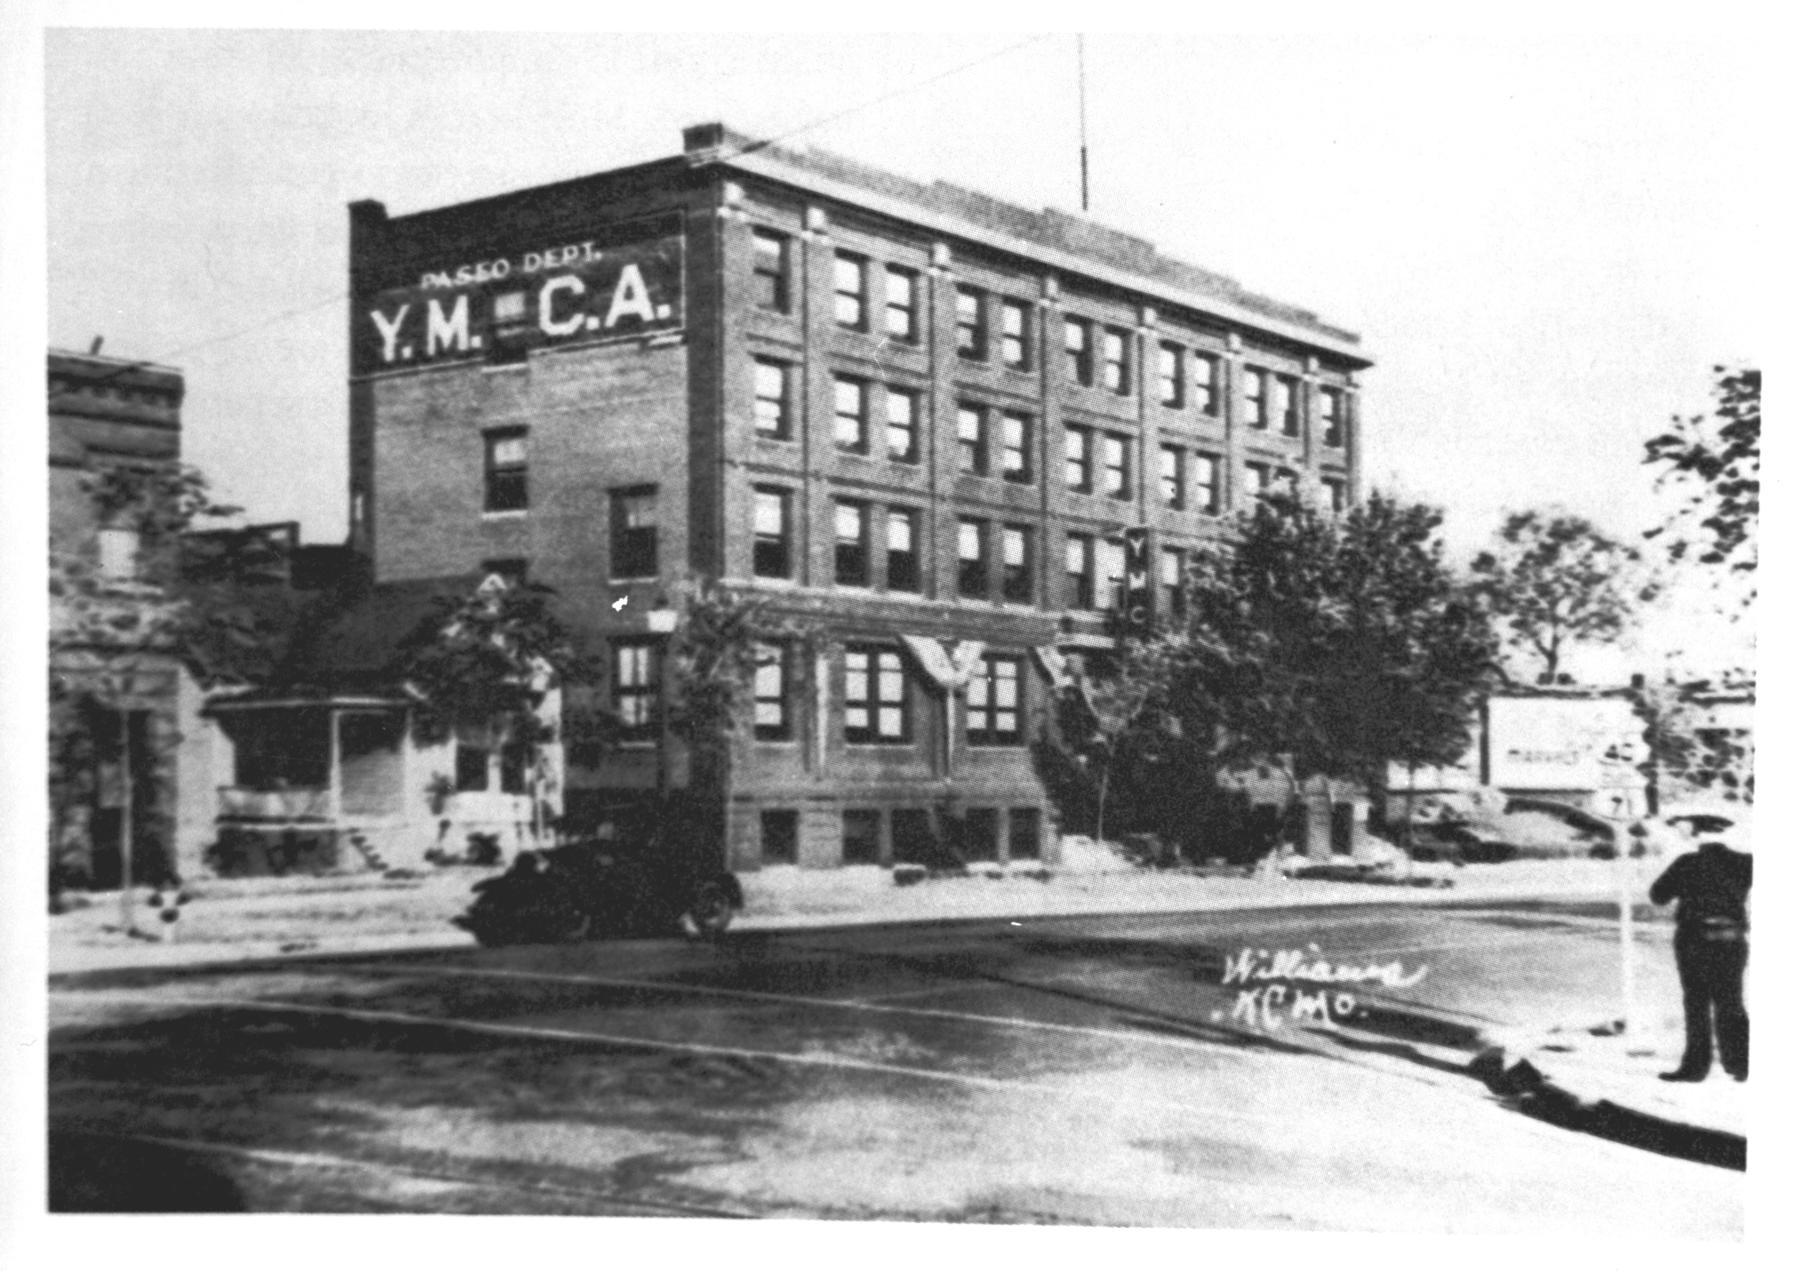 Vintage image of YMCA building